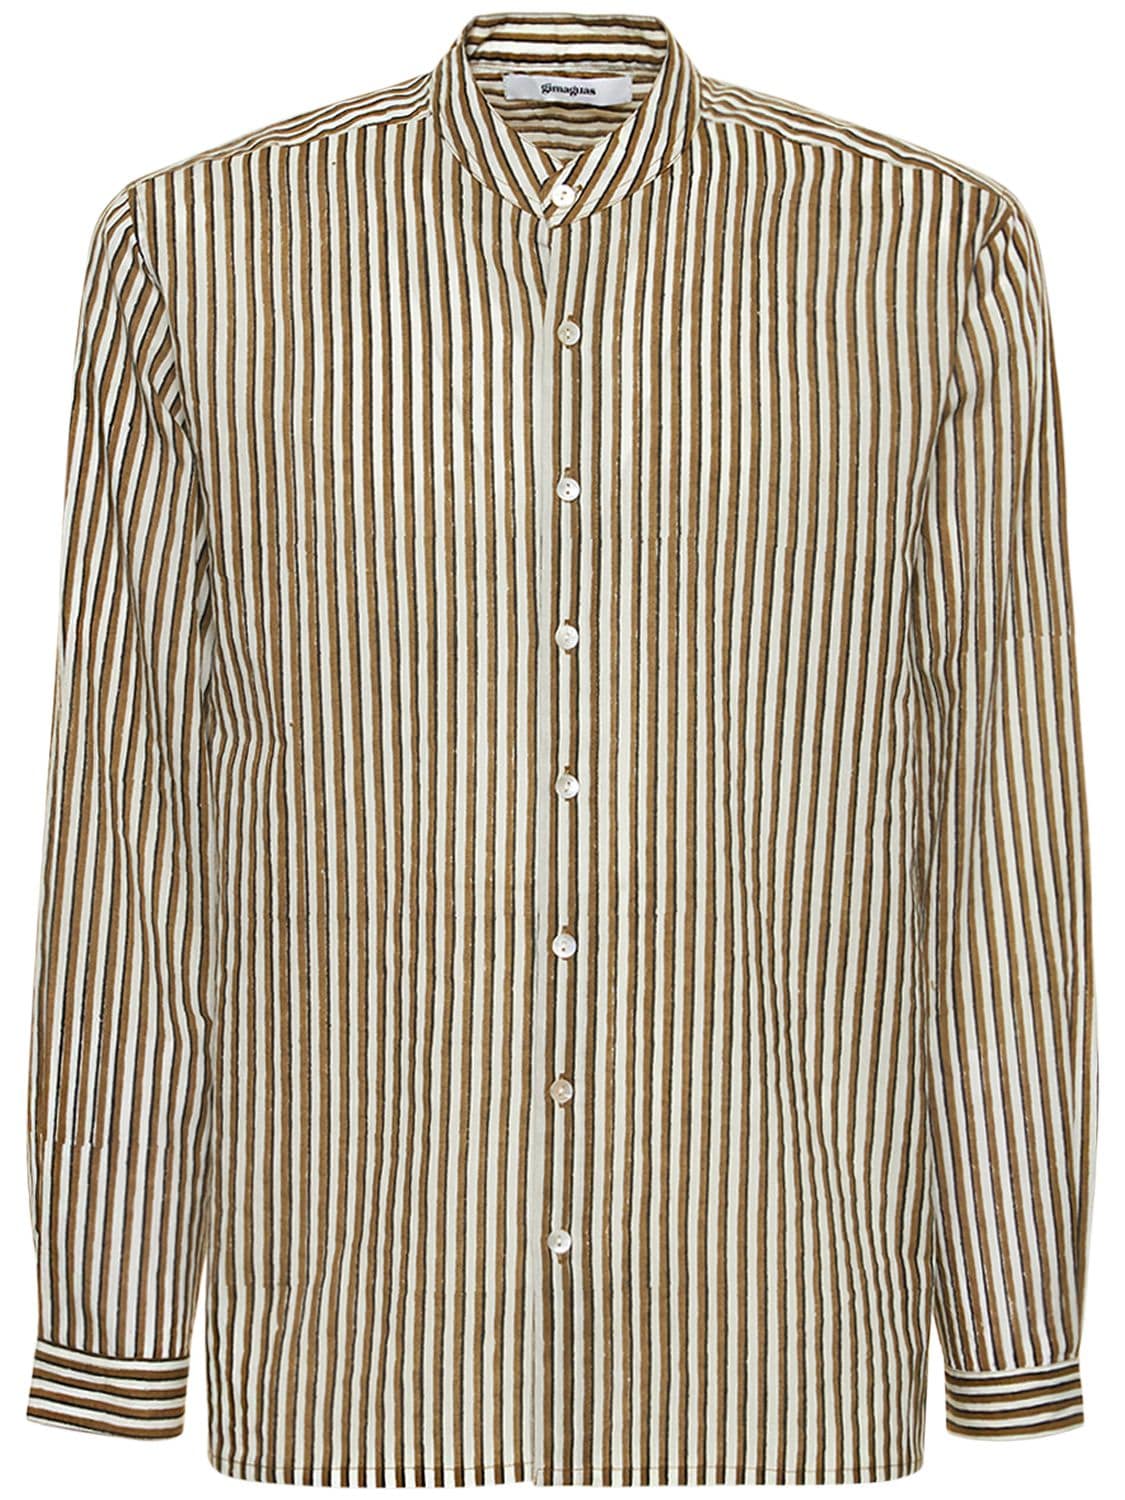 GIMAGUAS Stripe Print Cotton Shirt